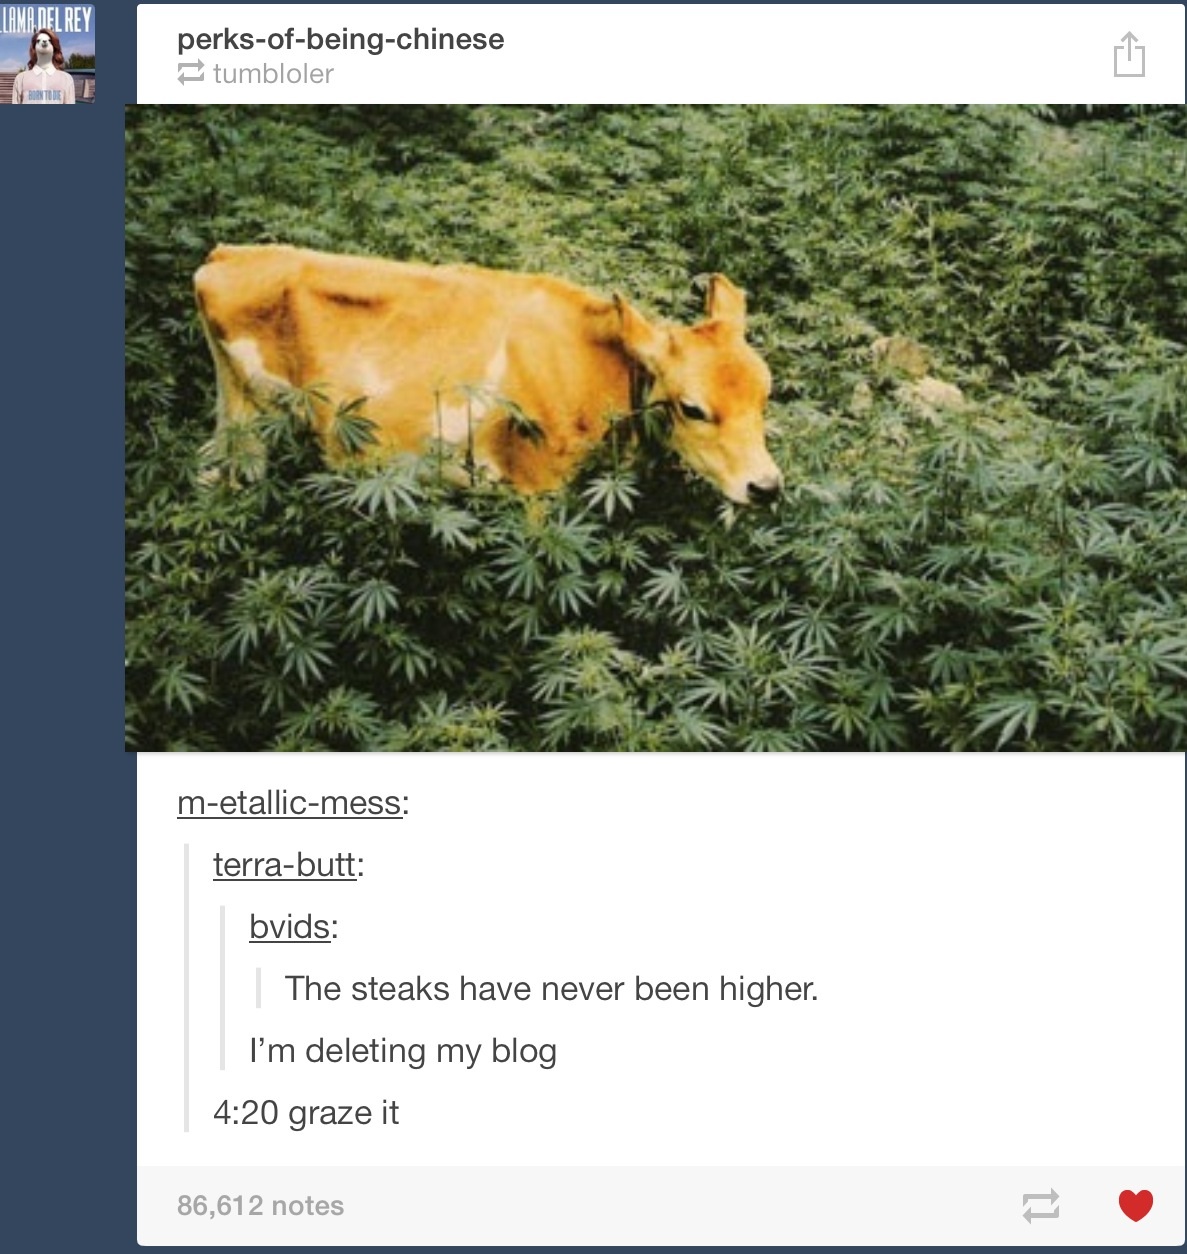 I'd eat that cow